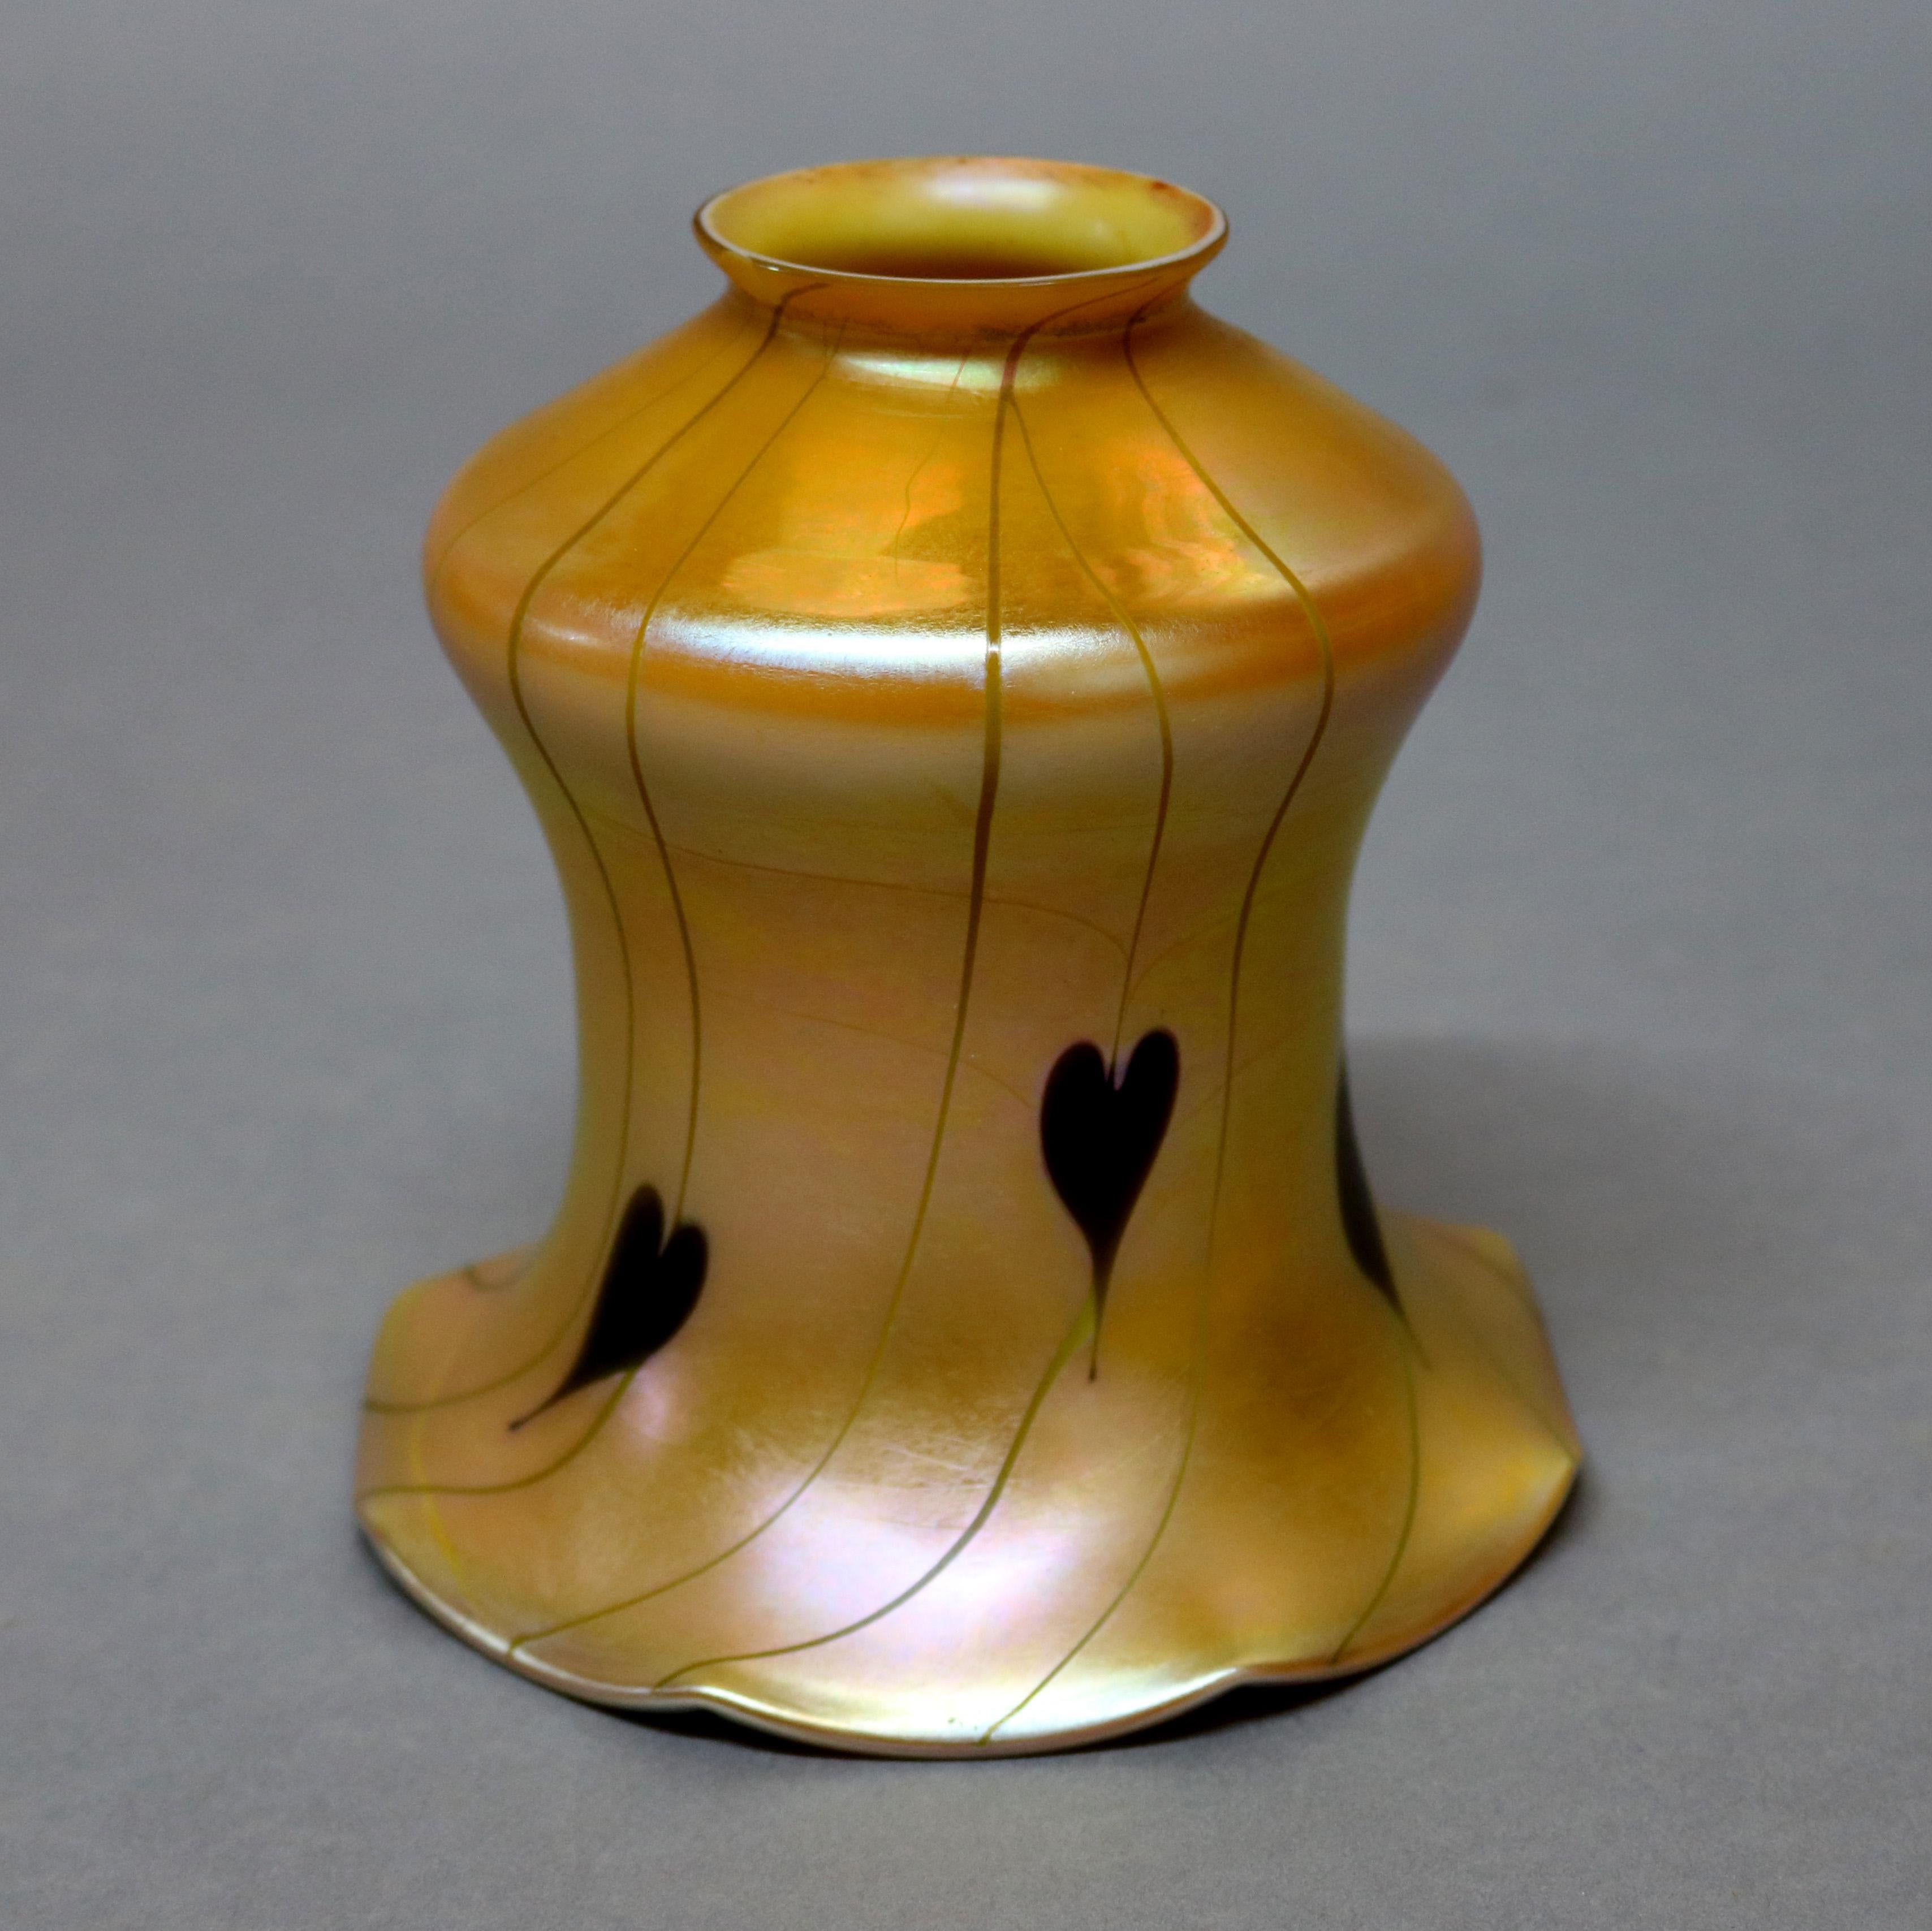 American Antique Steuben Heart and Vine Ruffled Rim Art Glass Lamp Shade, circa 1930